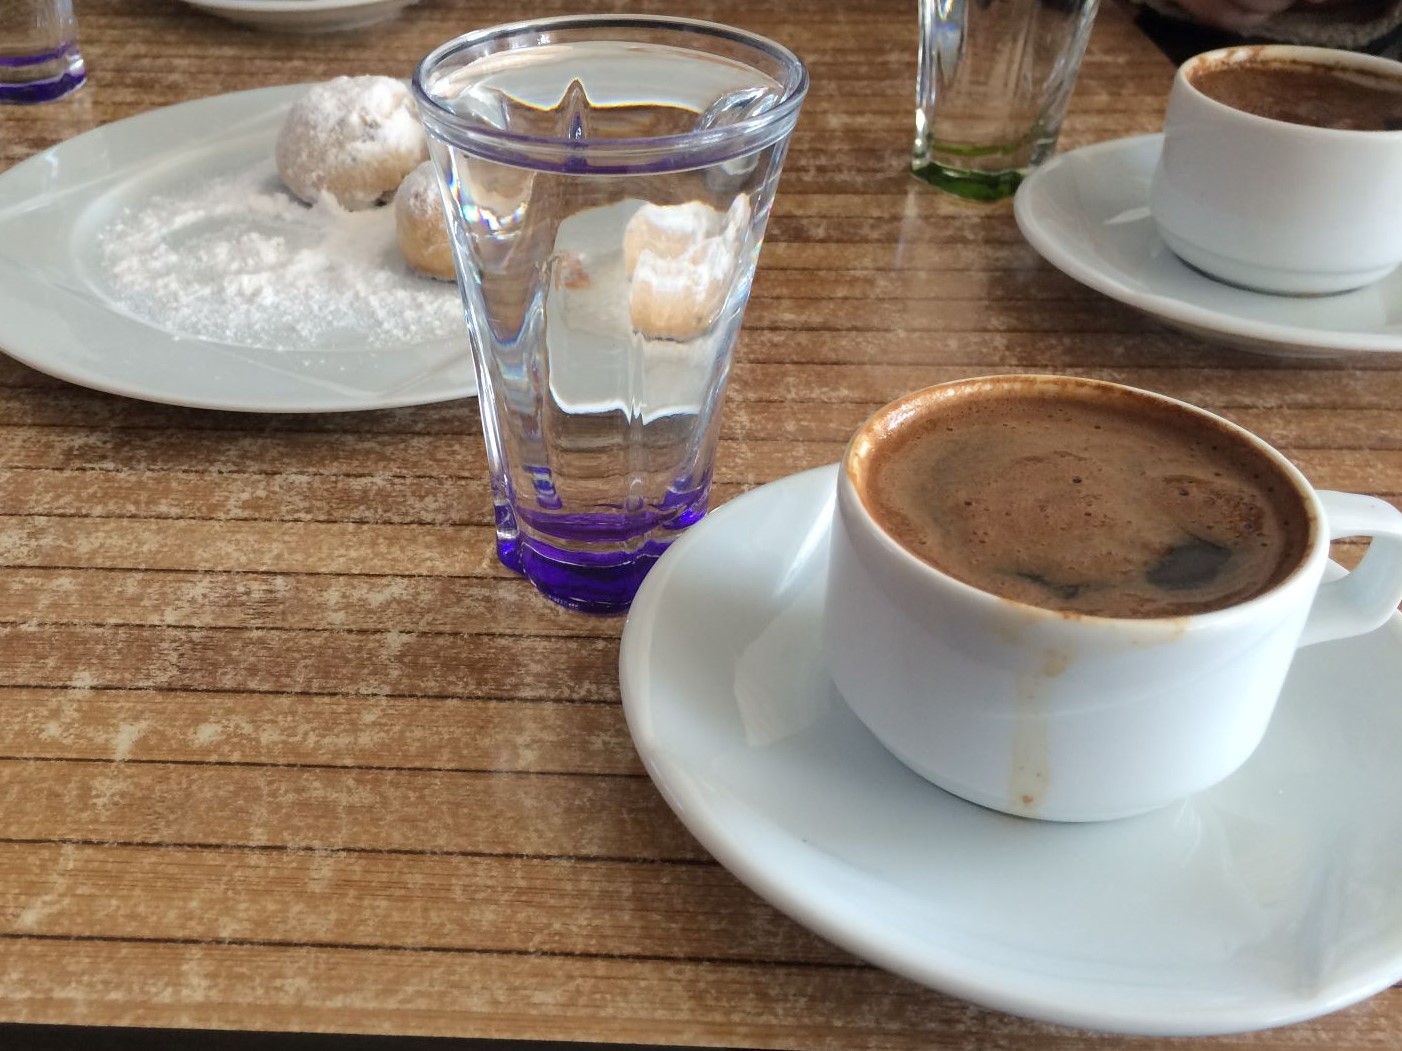 A beautifully presented coffee alongside Greek pastries, somewhere on Gökçeada. April 2016.